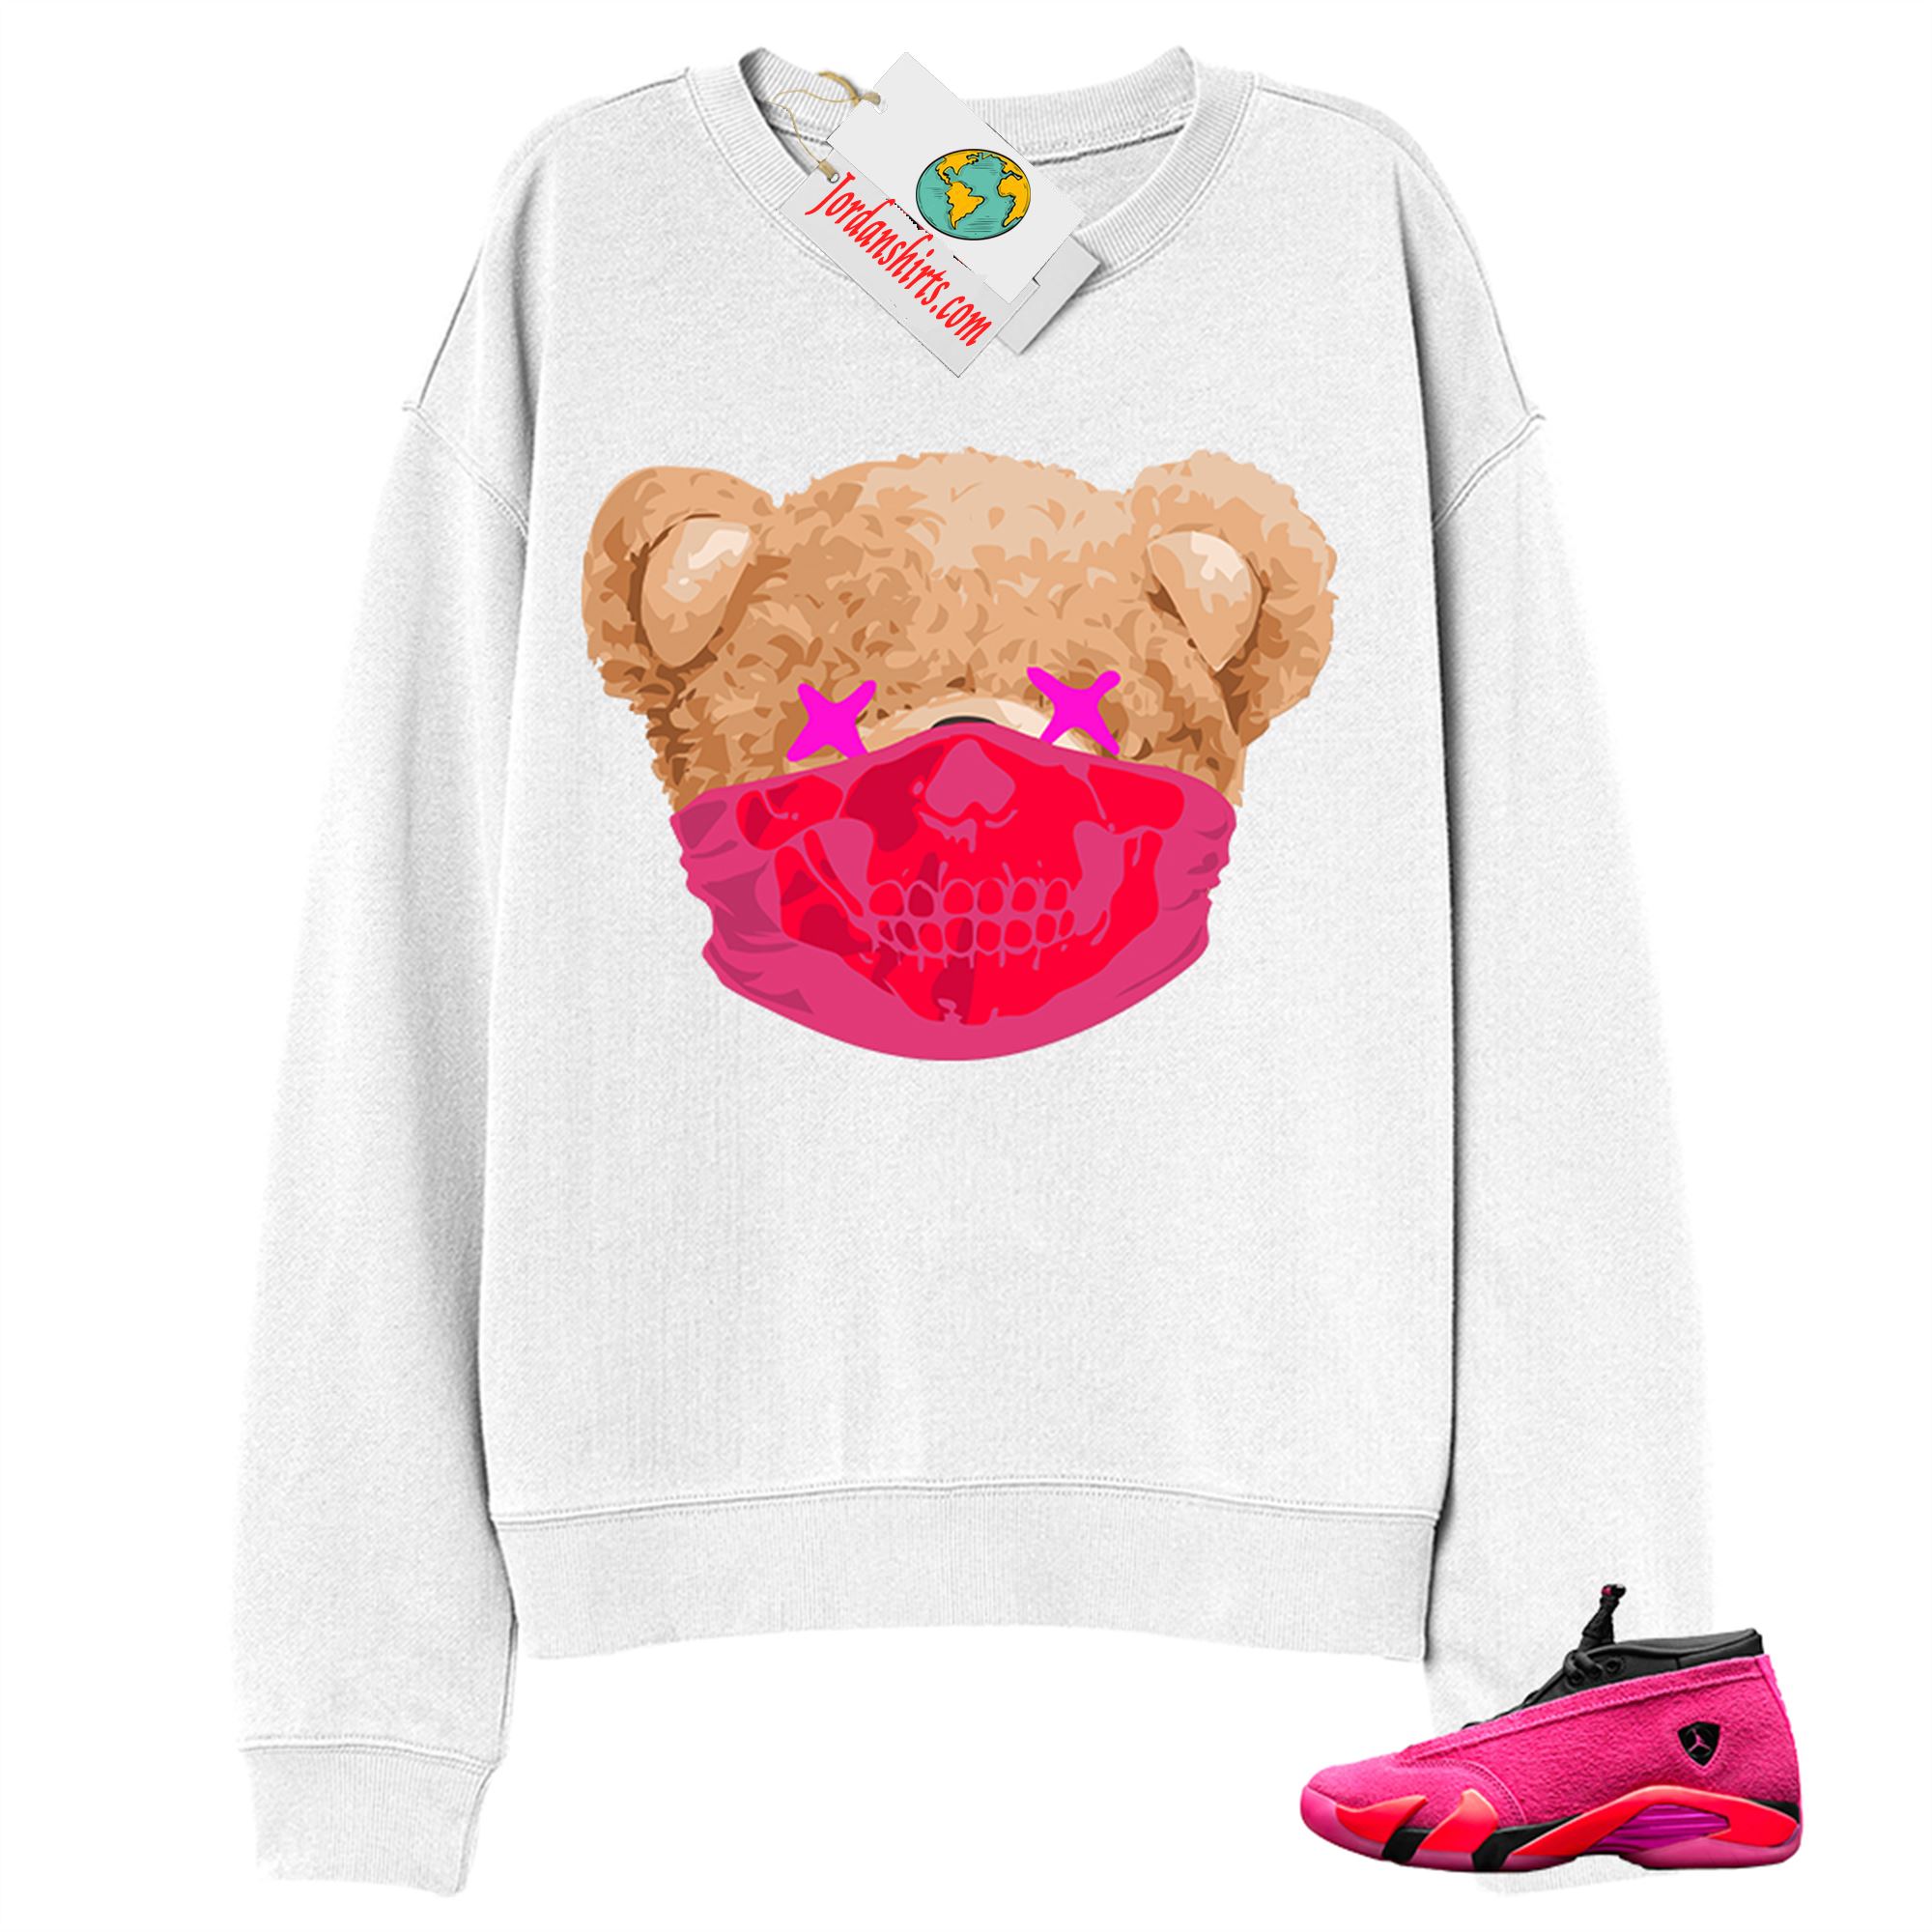 Jordan 14 Sweatshirt, Teddy Bear Skull Bandana White Sweatshirt Air Jordan 14 Wmns Shocking Pink 14s Size Up To 5xl